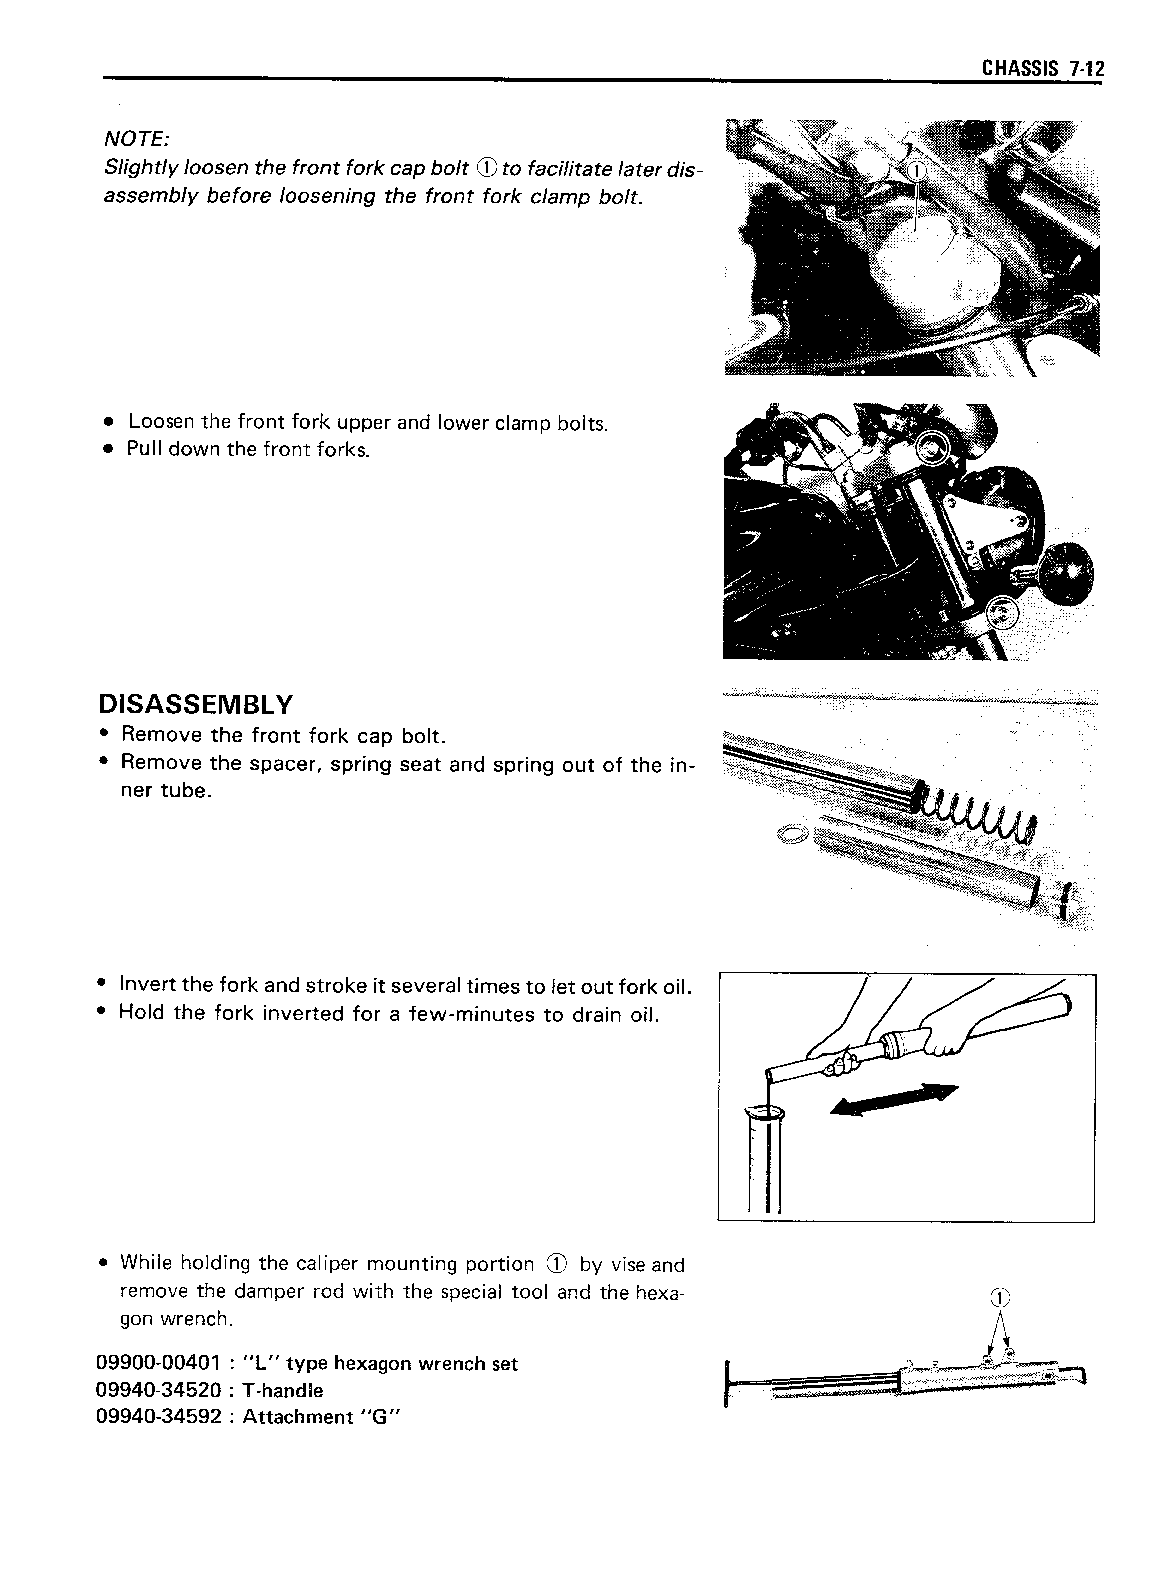 1991-1997 Suzuki GSF400 Bandit Manual